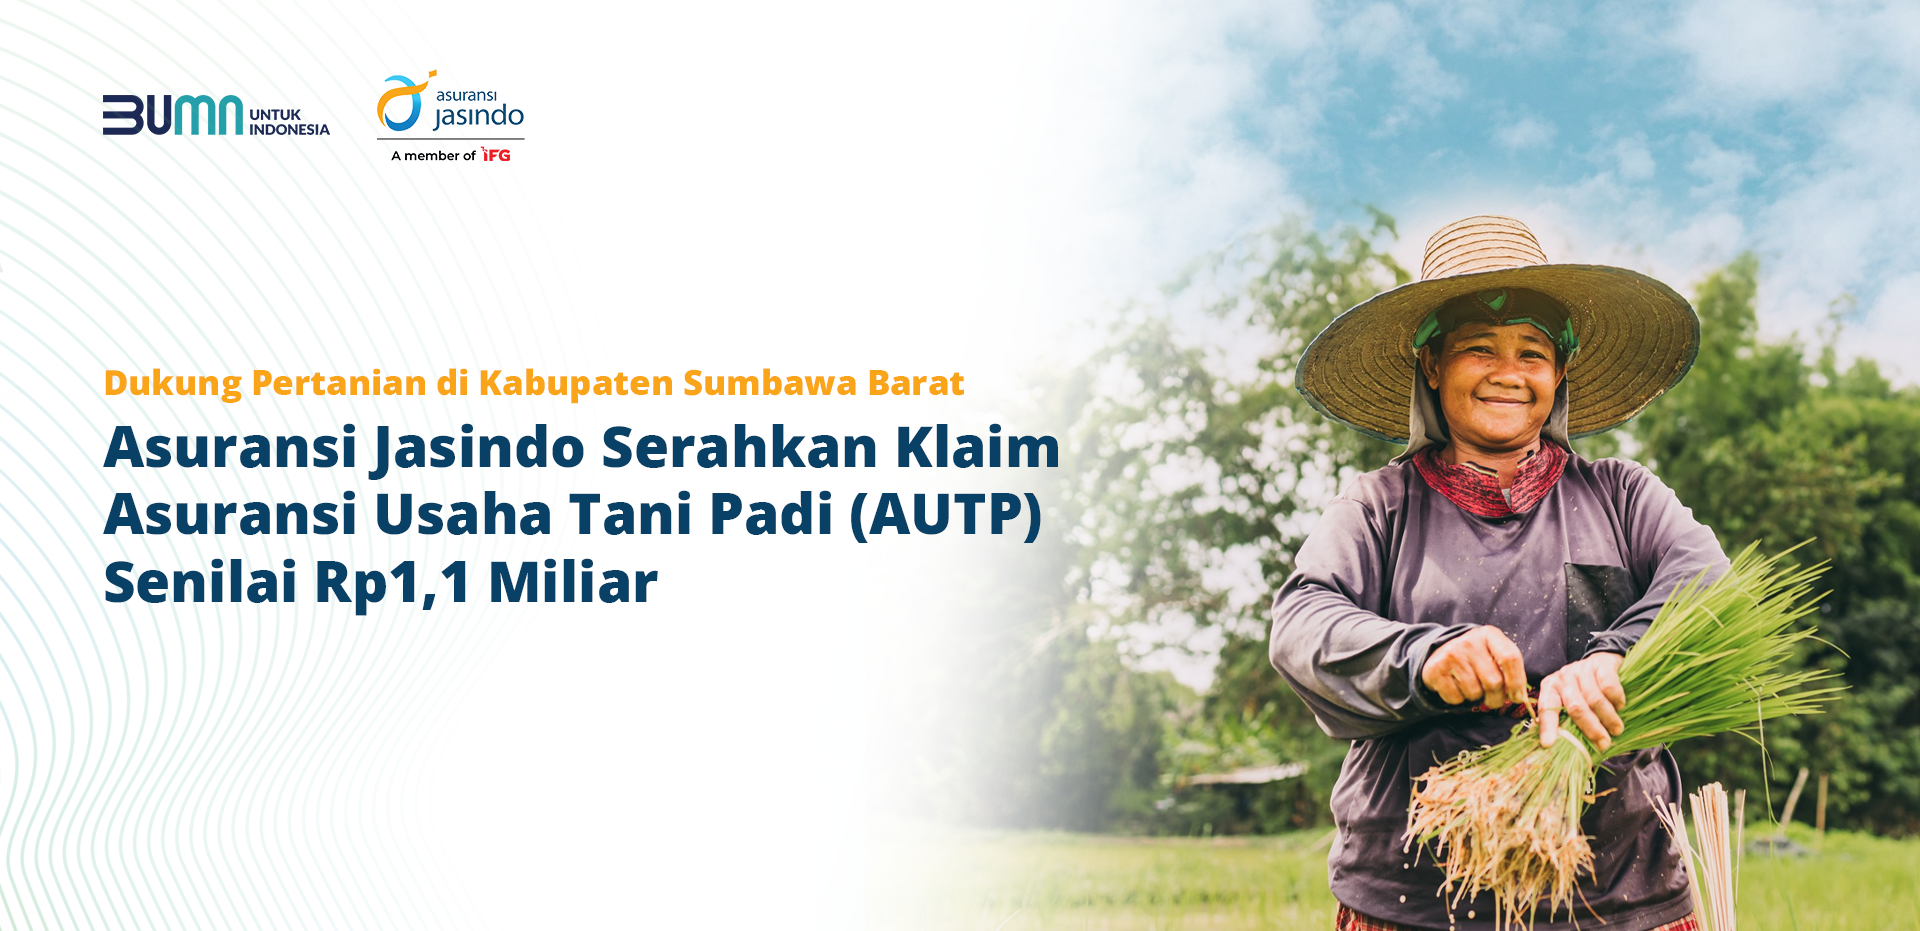 Dukung Pertanian di Kabupaten Sumbawa Barat, Asuransi Jasindo Serahkan Klaim Asuransi Usaha Tani Padi (AUTP) Senilai Rp1,1 Miliar